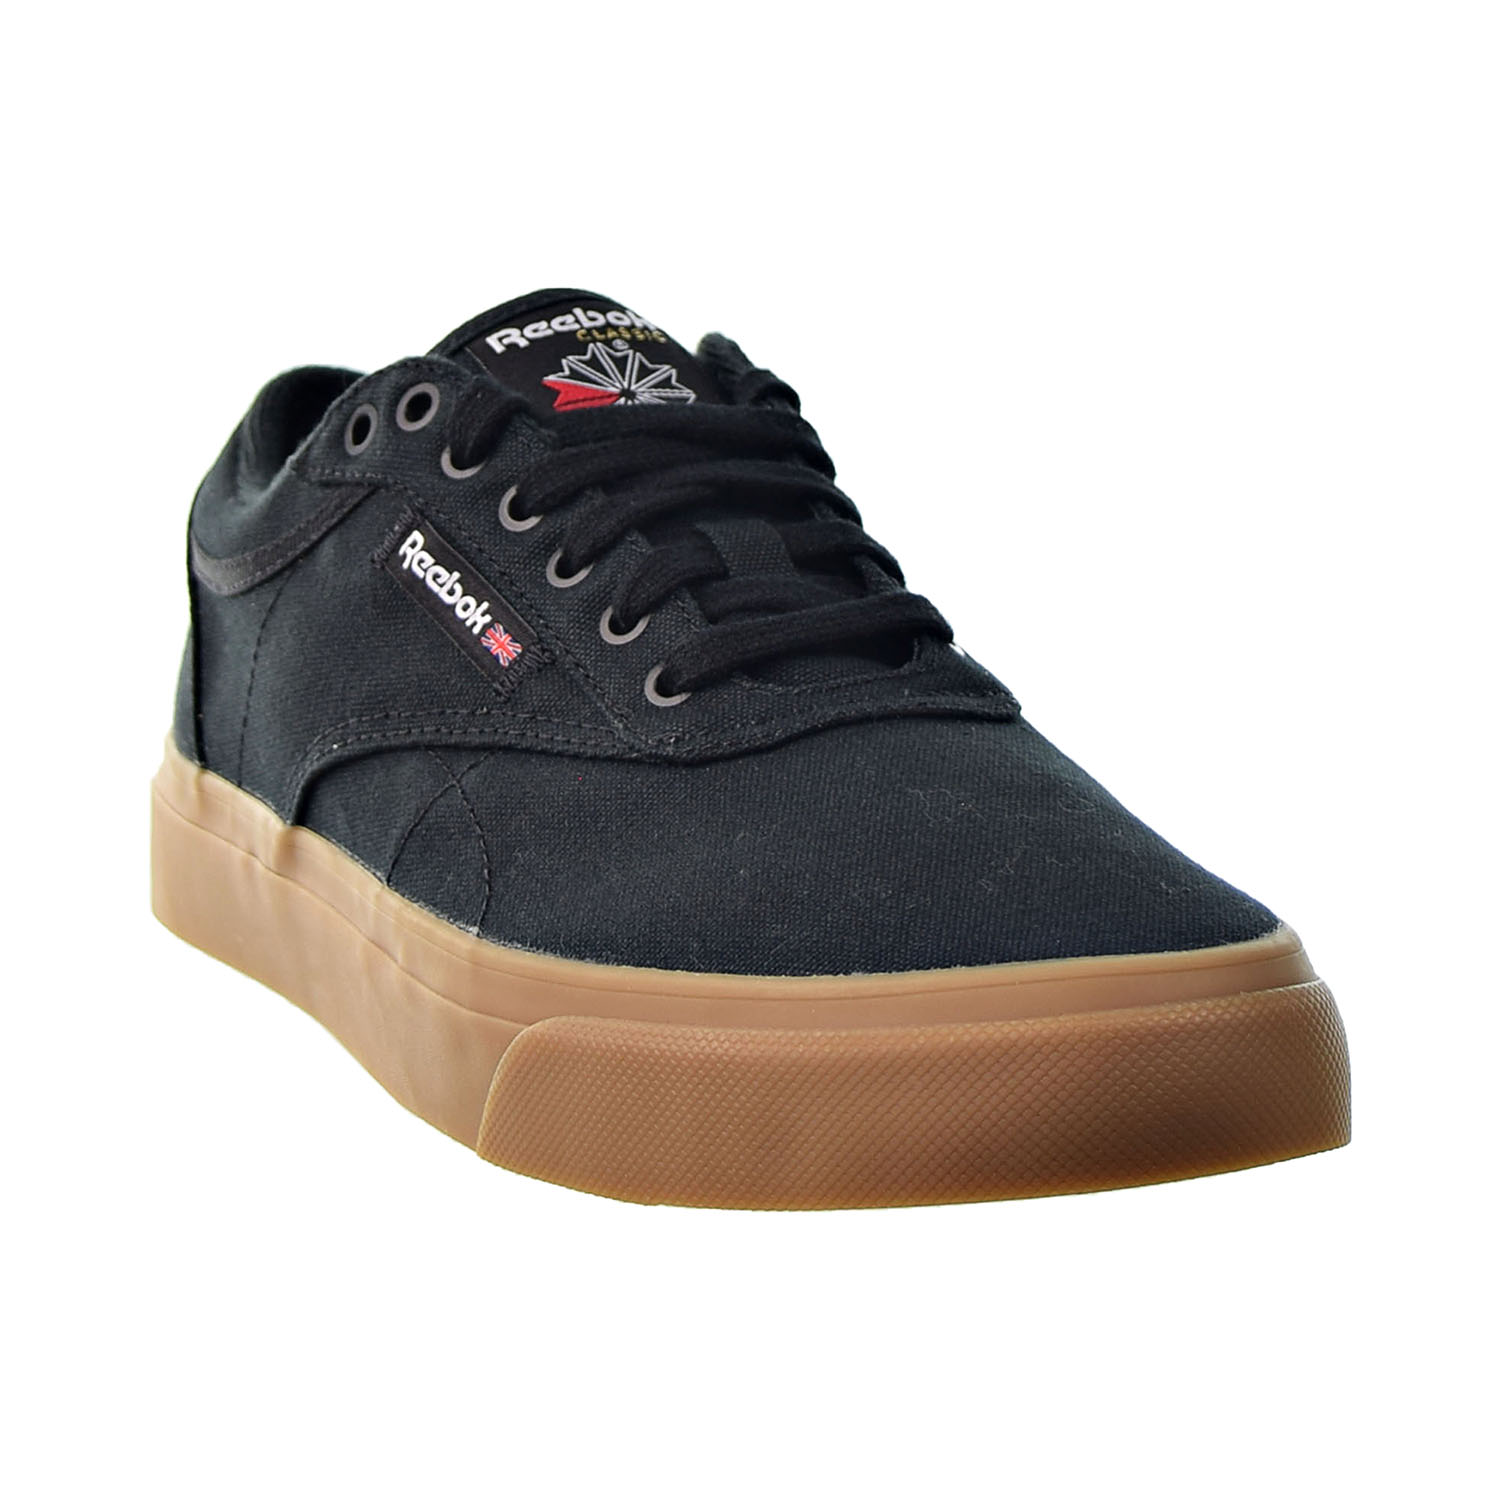 Reebok Club C Coast Men's Shoes Black-White-Reebok Lee 3 fy5598 - image 2 of 6